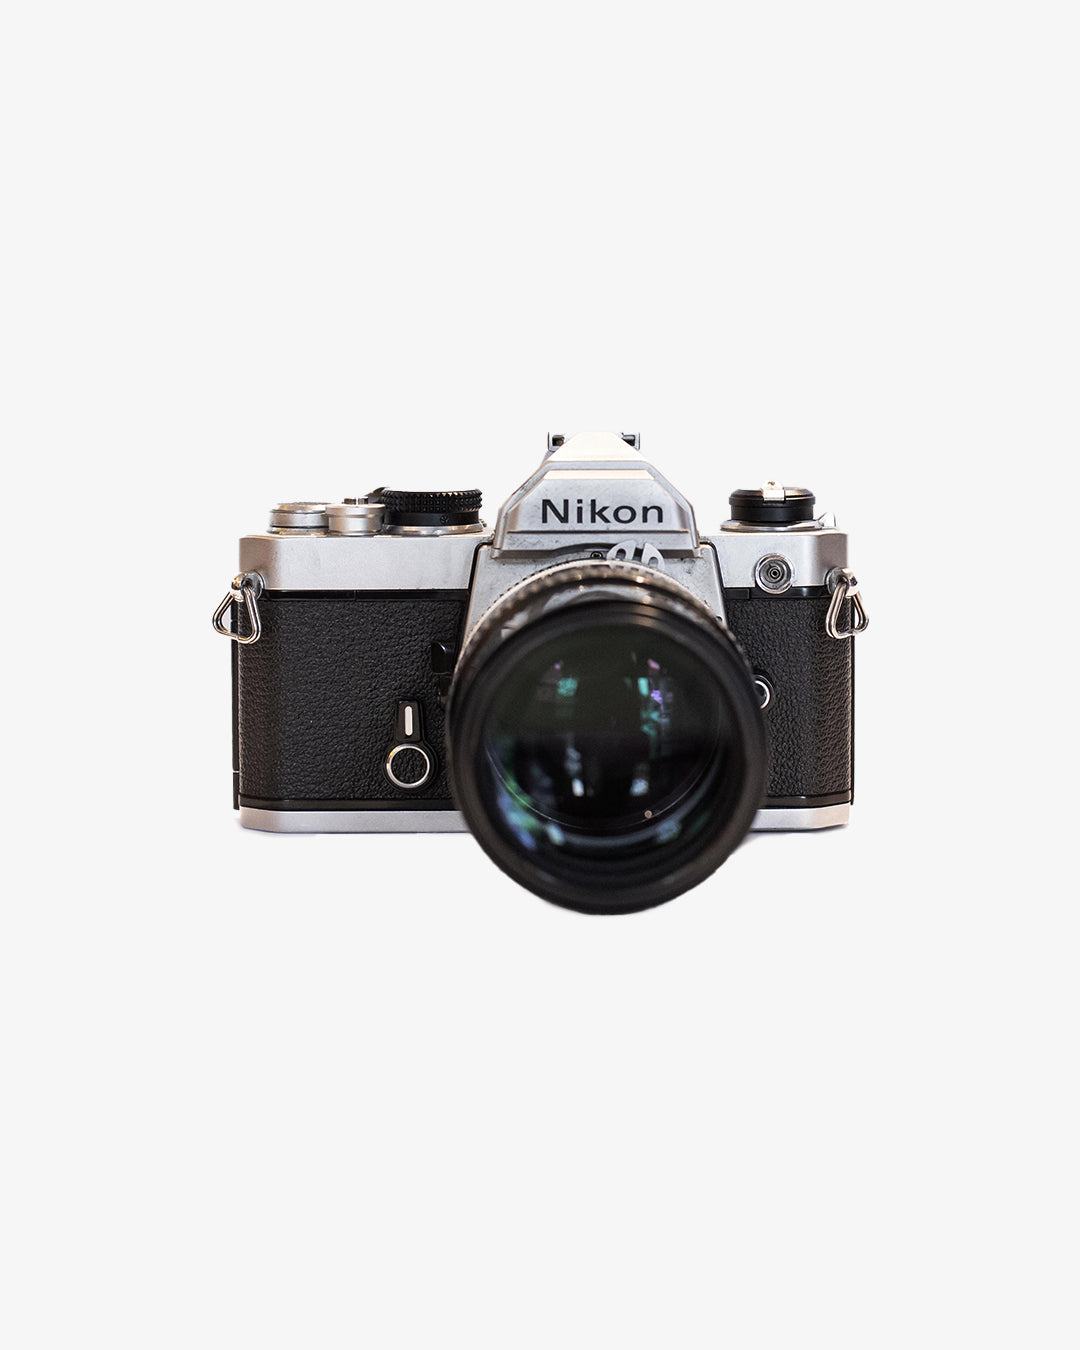 Nikon FM SLR Camera with 135mm f2.8 lens